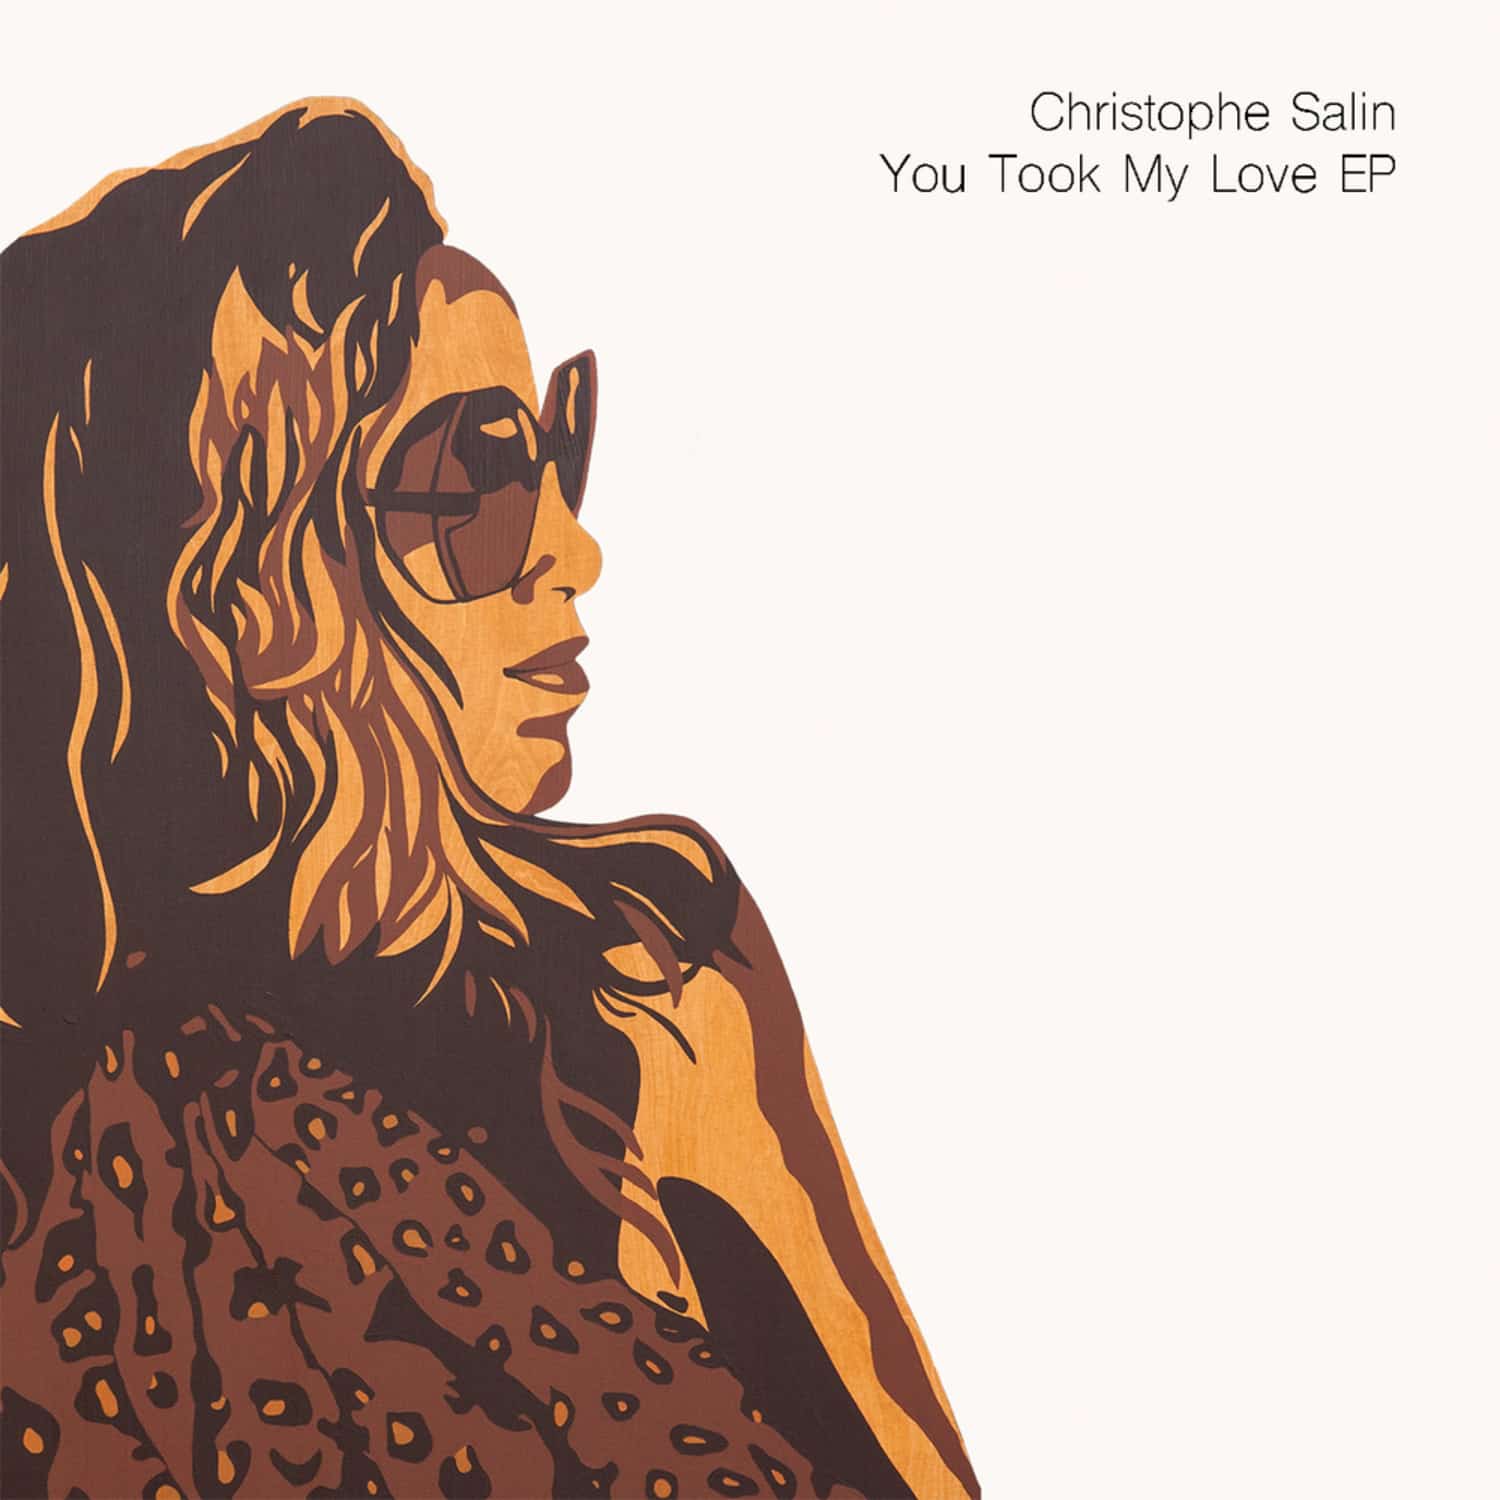 Christophe Salin - YOU TOOK MY LOVE EP